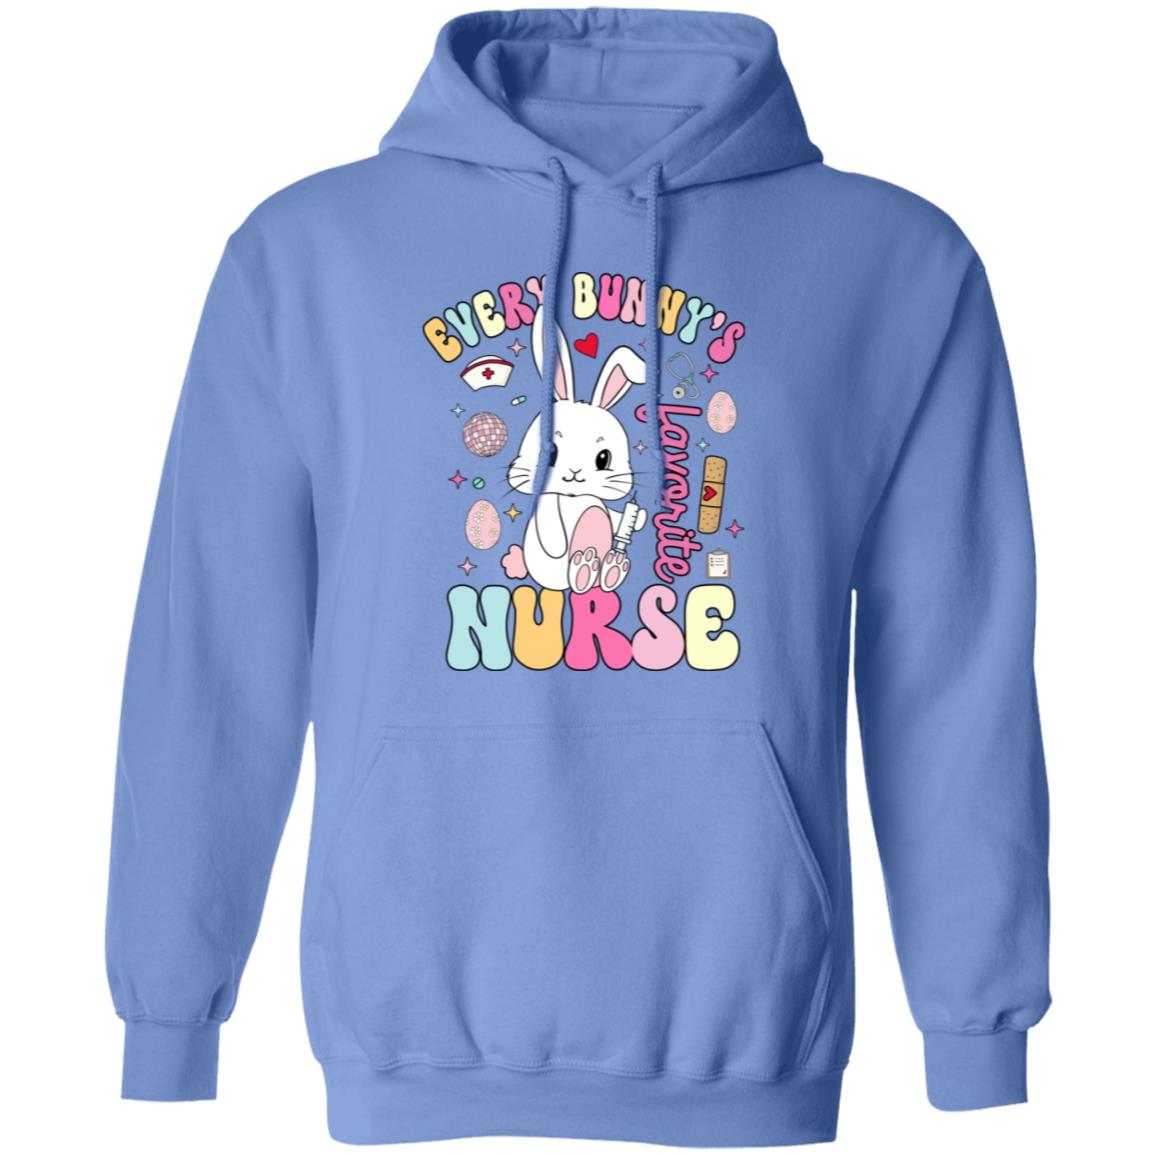 Every Bunny's Favorite Nurse Pullover Hoodie